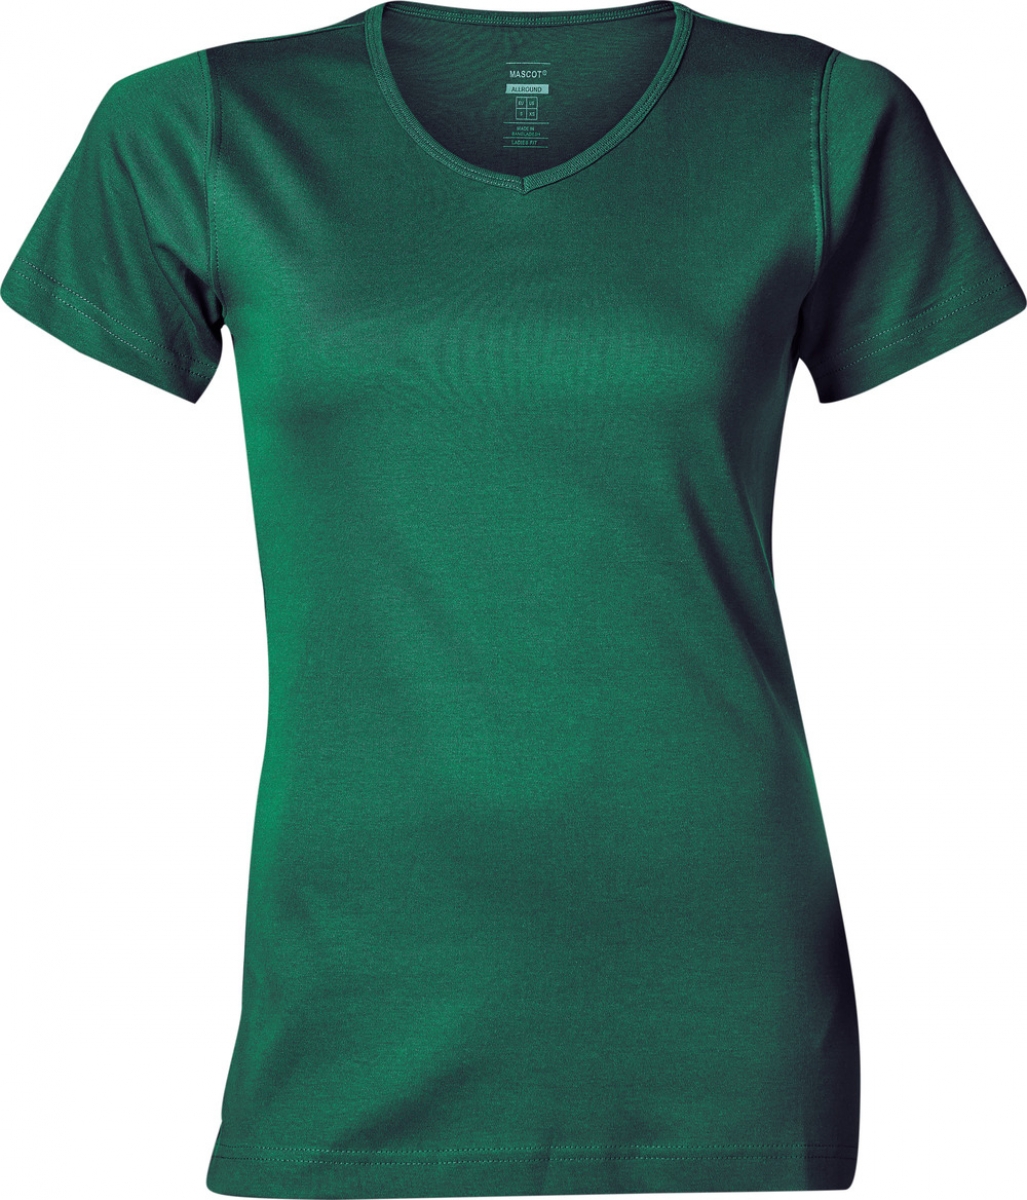 MASCOT-Worker-Shirts, Damen-T-Shirt, Nice, 220 g/m,  grn